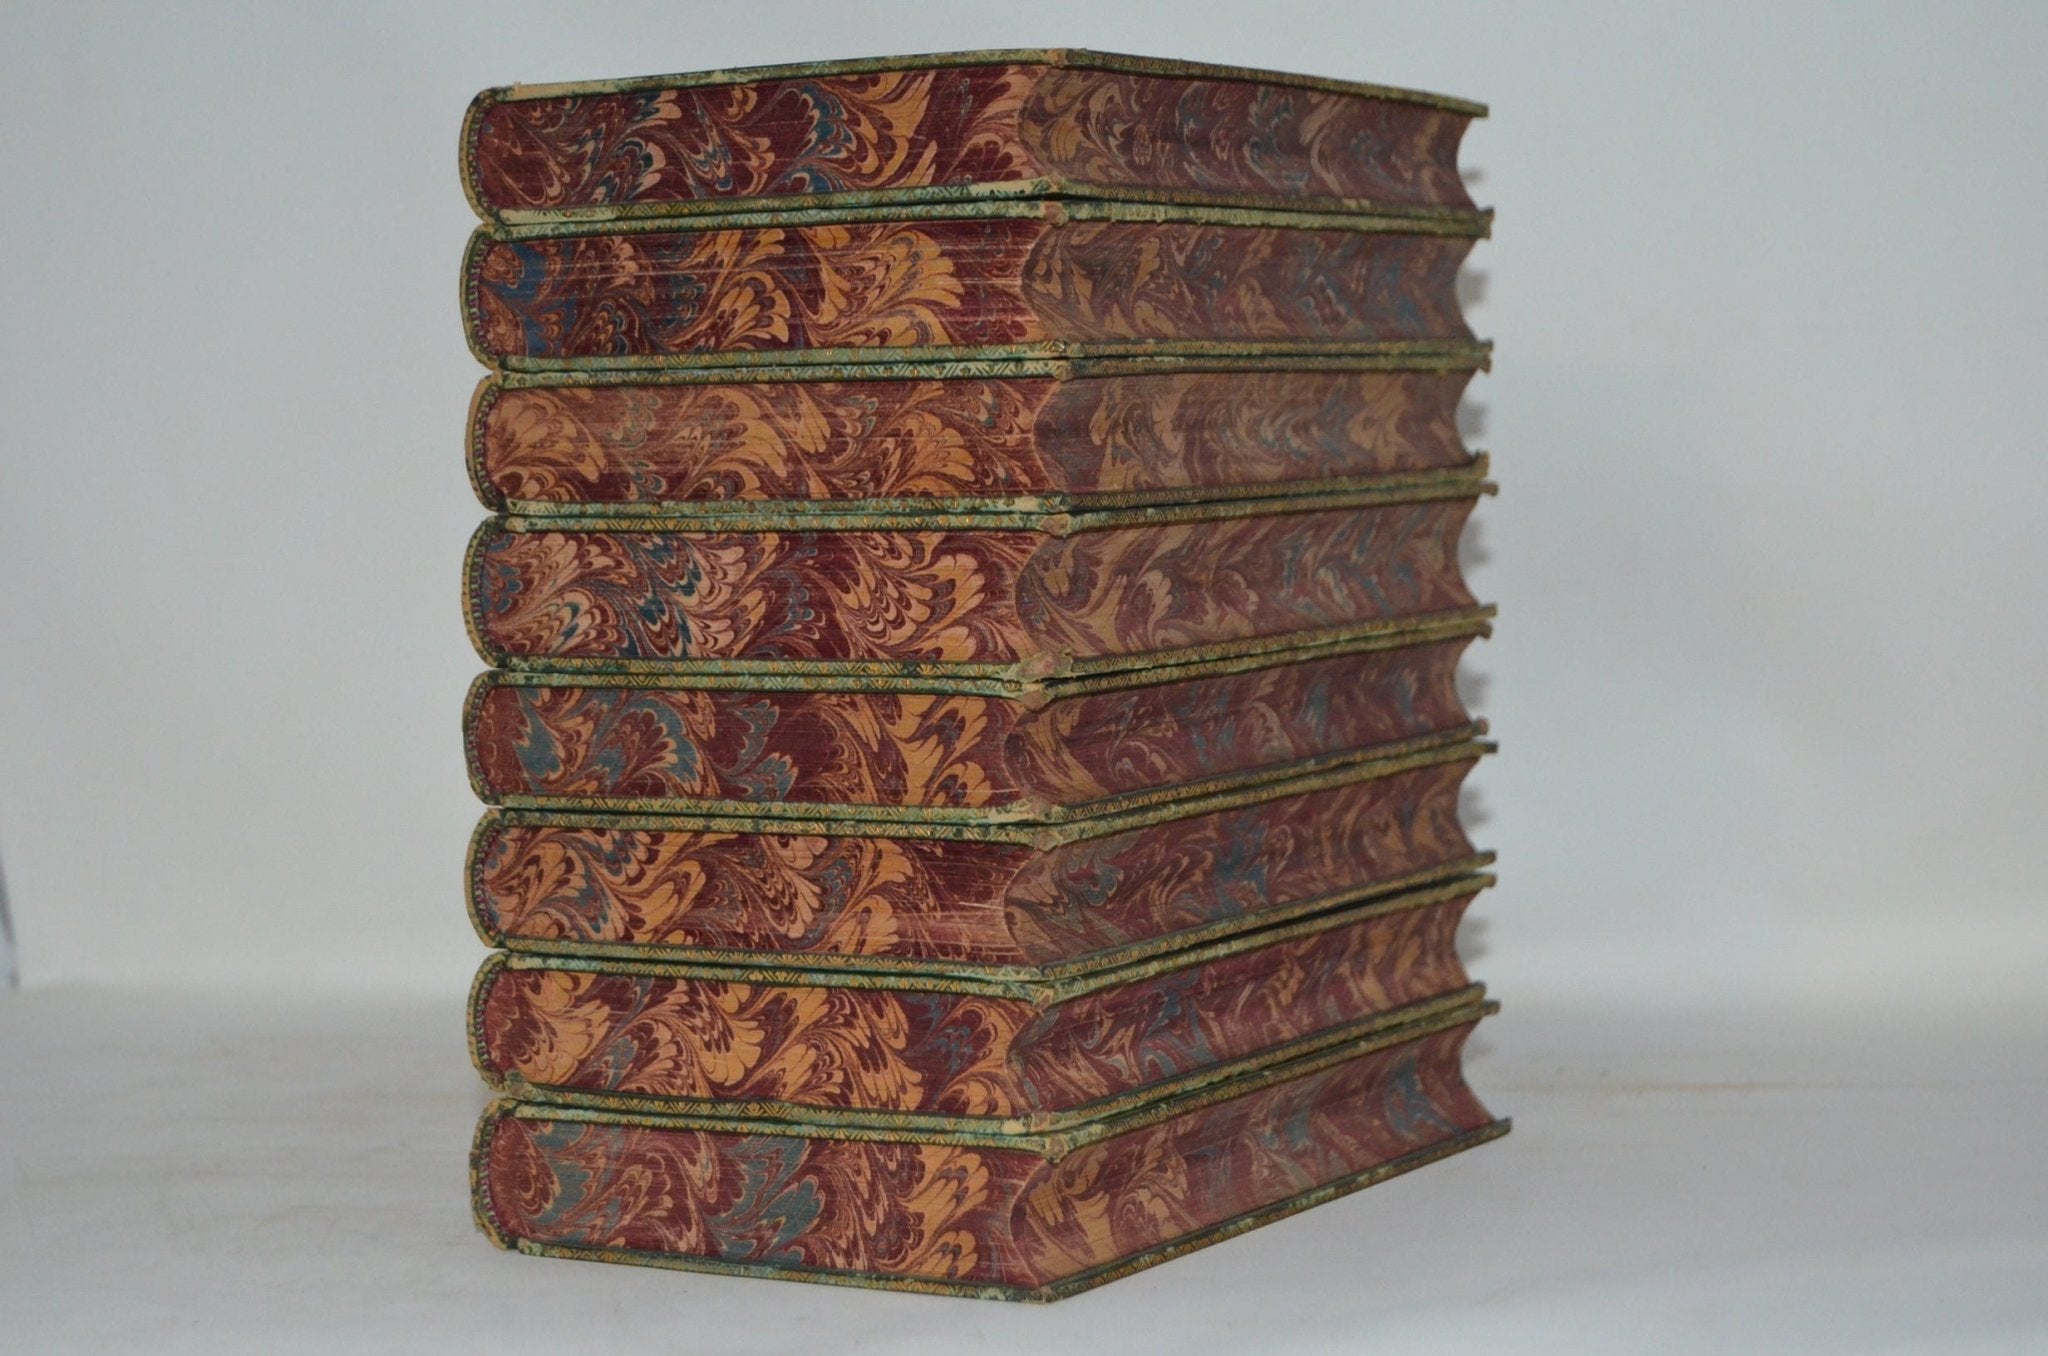 Antique Leather Bound Book Décor – 9” Dark Green & Gold - Waverley Novels - Brookfield Books